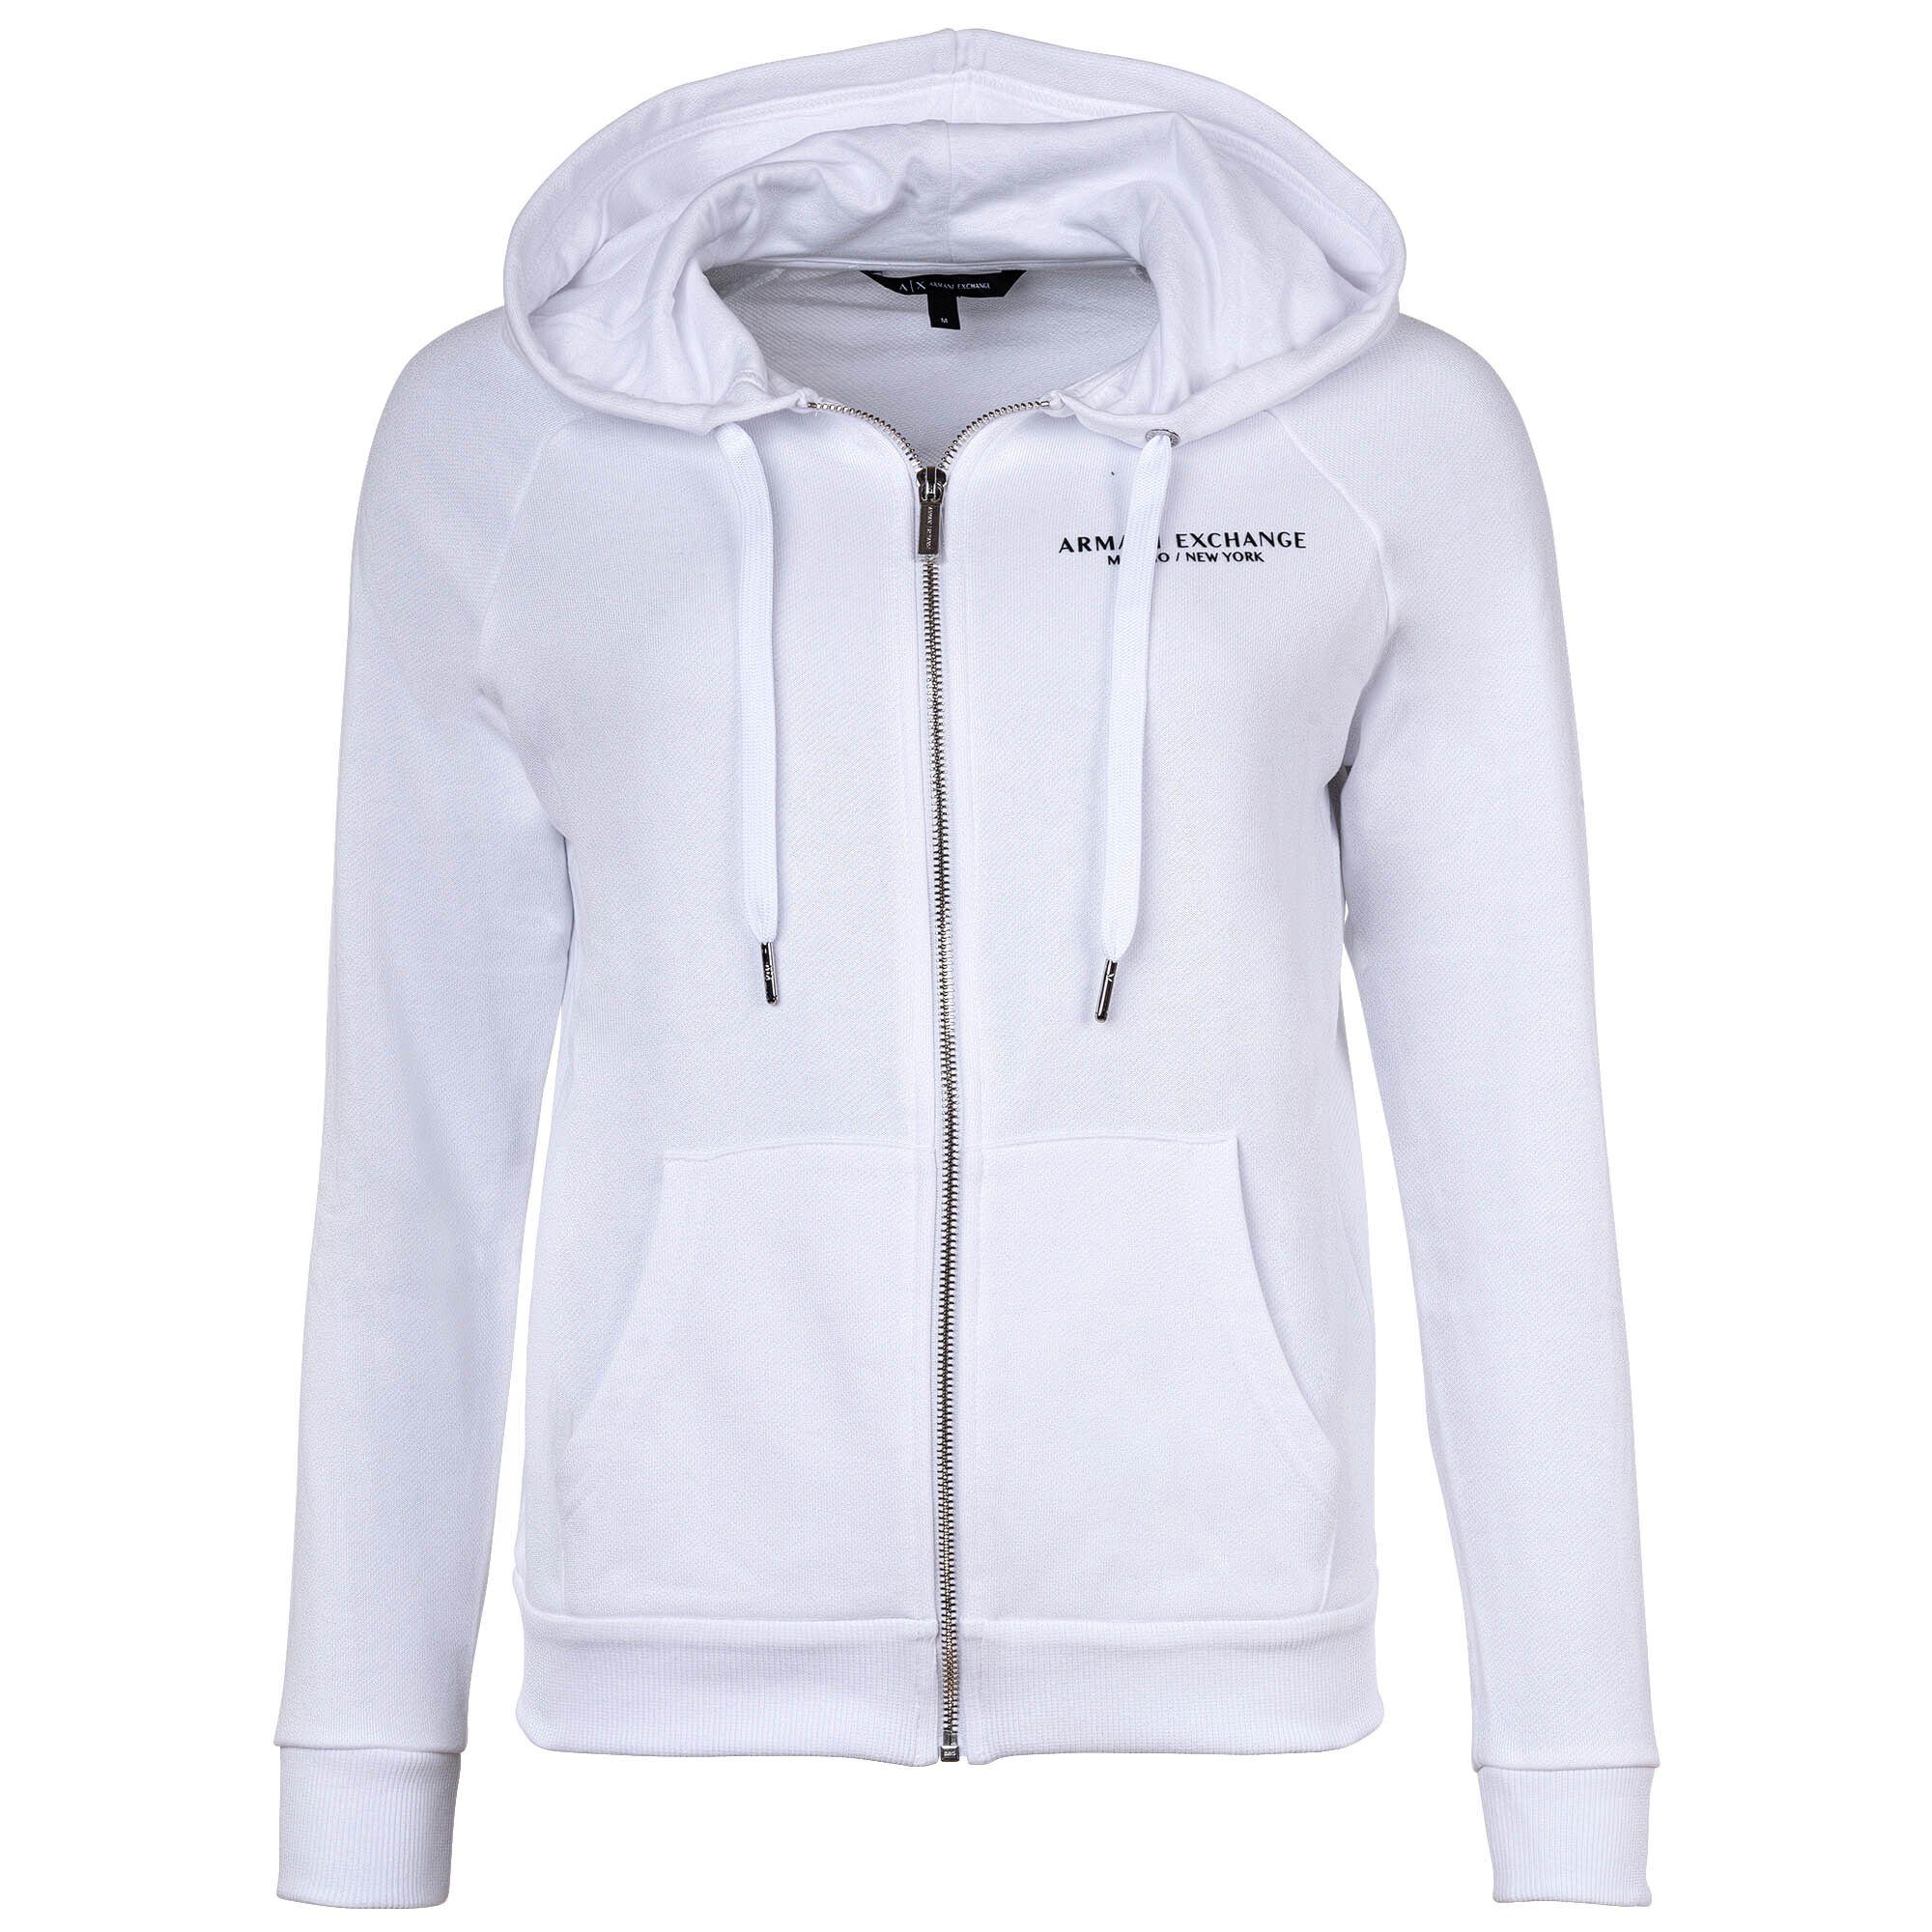 ARMANI EXCHANGE Sweater Damen Sweatjacke - Reißverschluss, Kapuze, Logo Weiß